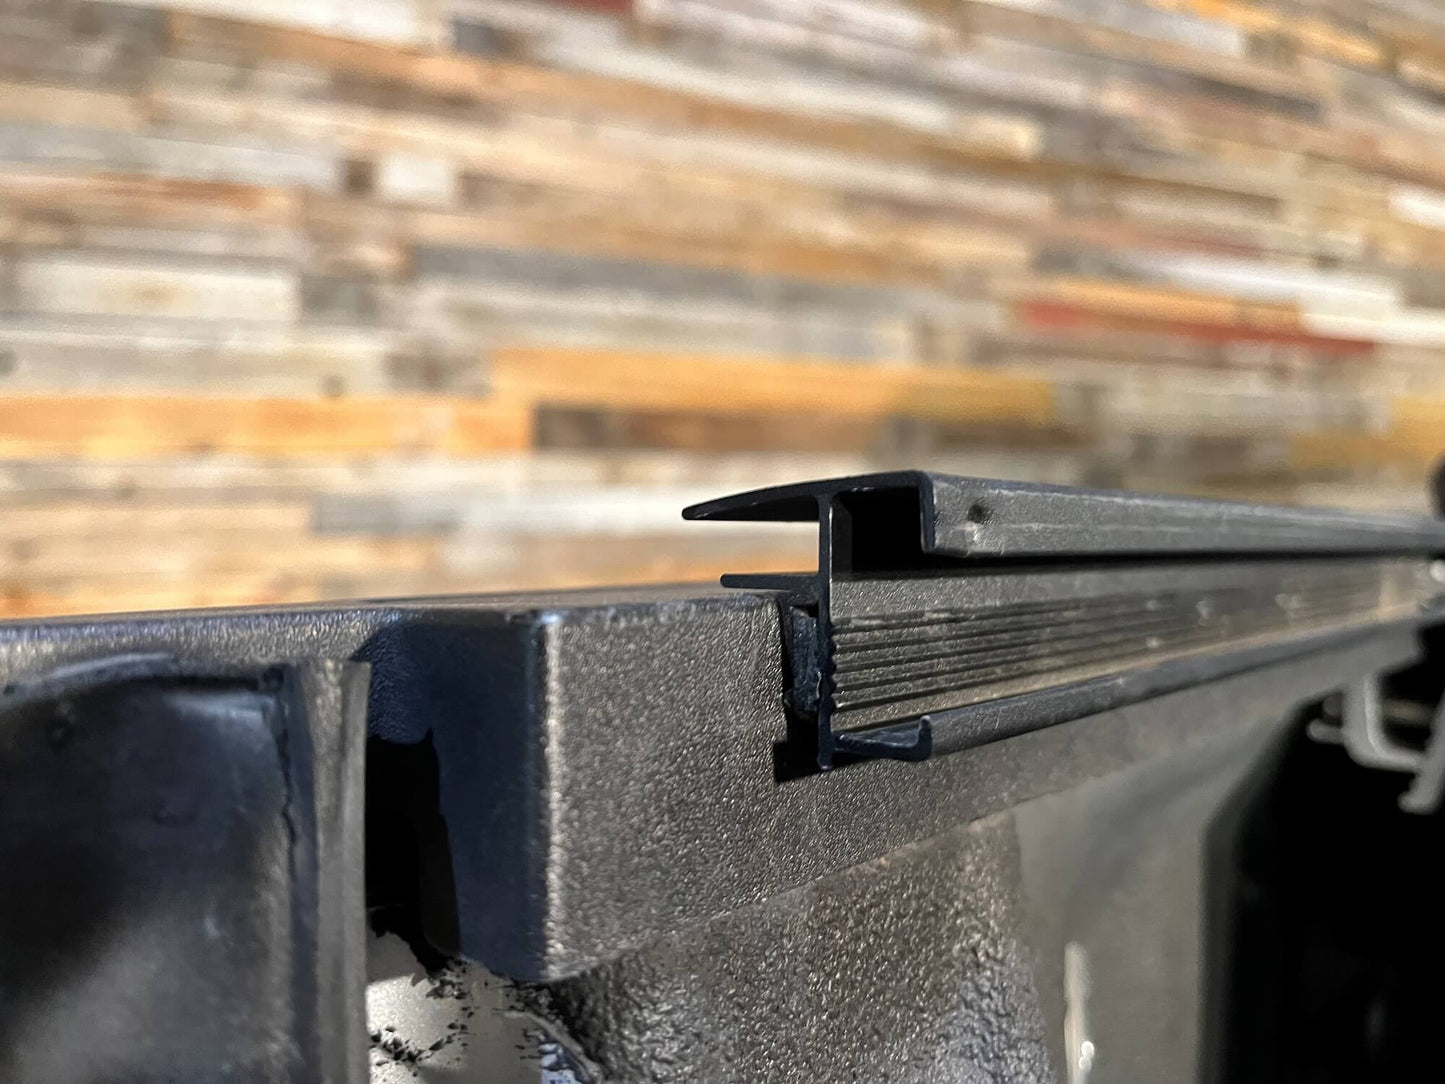 Sawtooth Stretch tonneau black aluminum side rails installed on Ram 3500 pickup truck bed rails